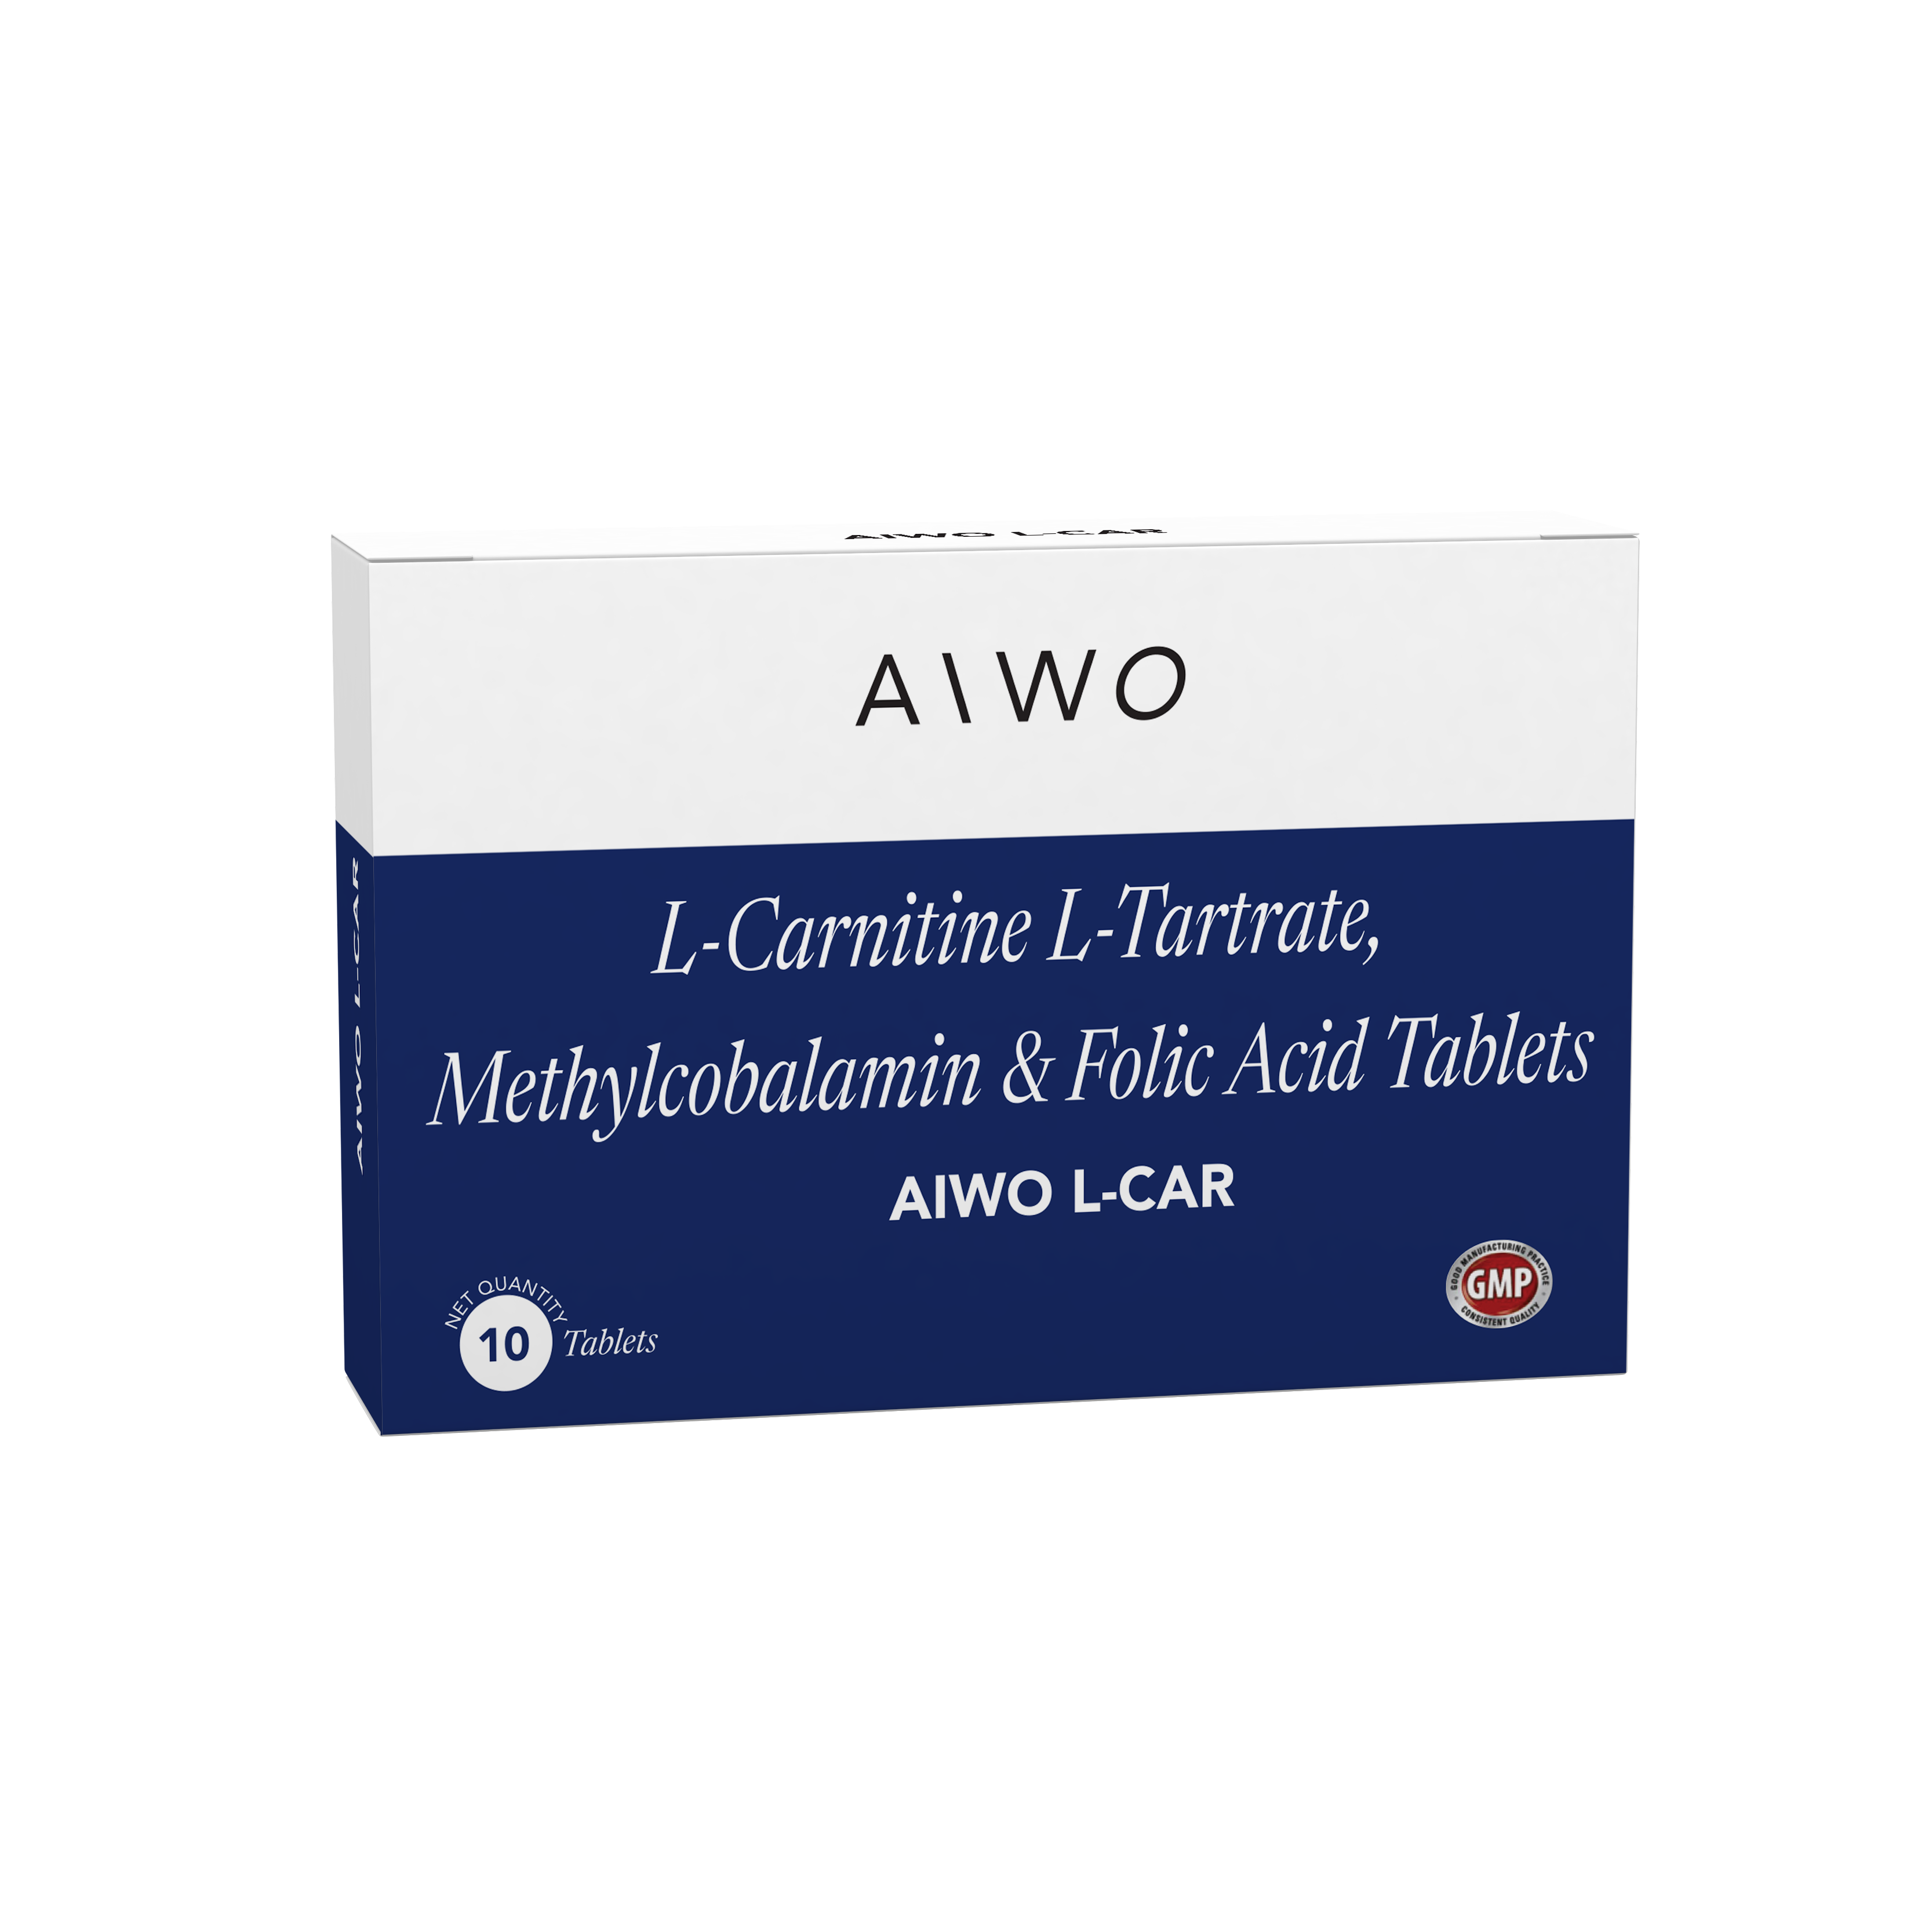 Aiwo L- Carnitine L- Tartrate, methylcobalamin and folic acid tablets